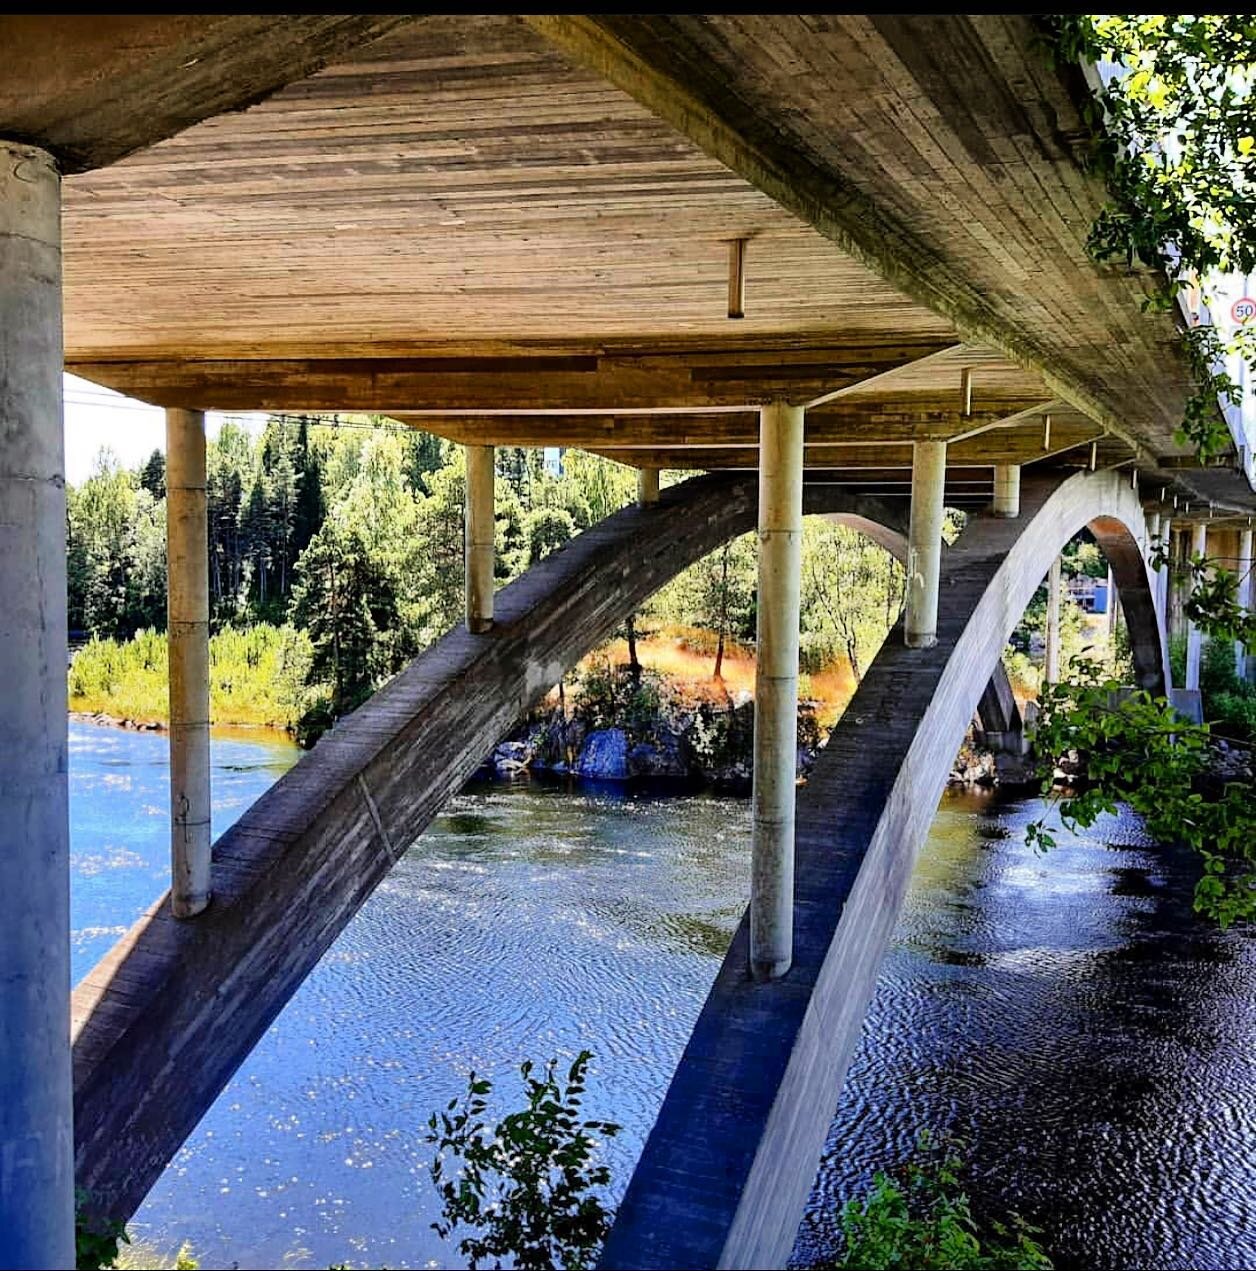 Under The bridge -Venneslafjorden
-
📷 @adri_felker 

.
.
.

#vennesla #vistitvennesla #mittvennesla #hvaskjerivennesla #bes&oslash;kvennesla #t&oslash;mmerrenna #setesdalsbanen #vigelandhovedg&aring;rd #sv&oslash;mmehall #tursti #otra #laksefiske #&